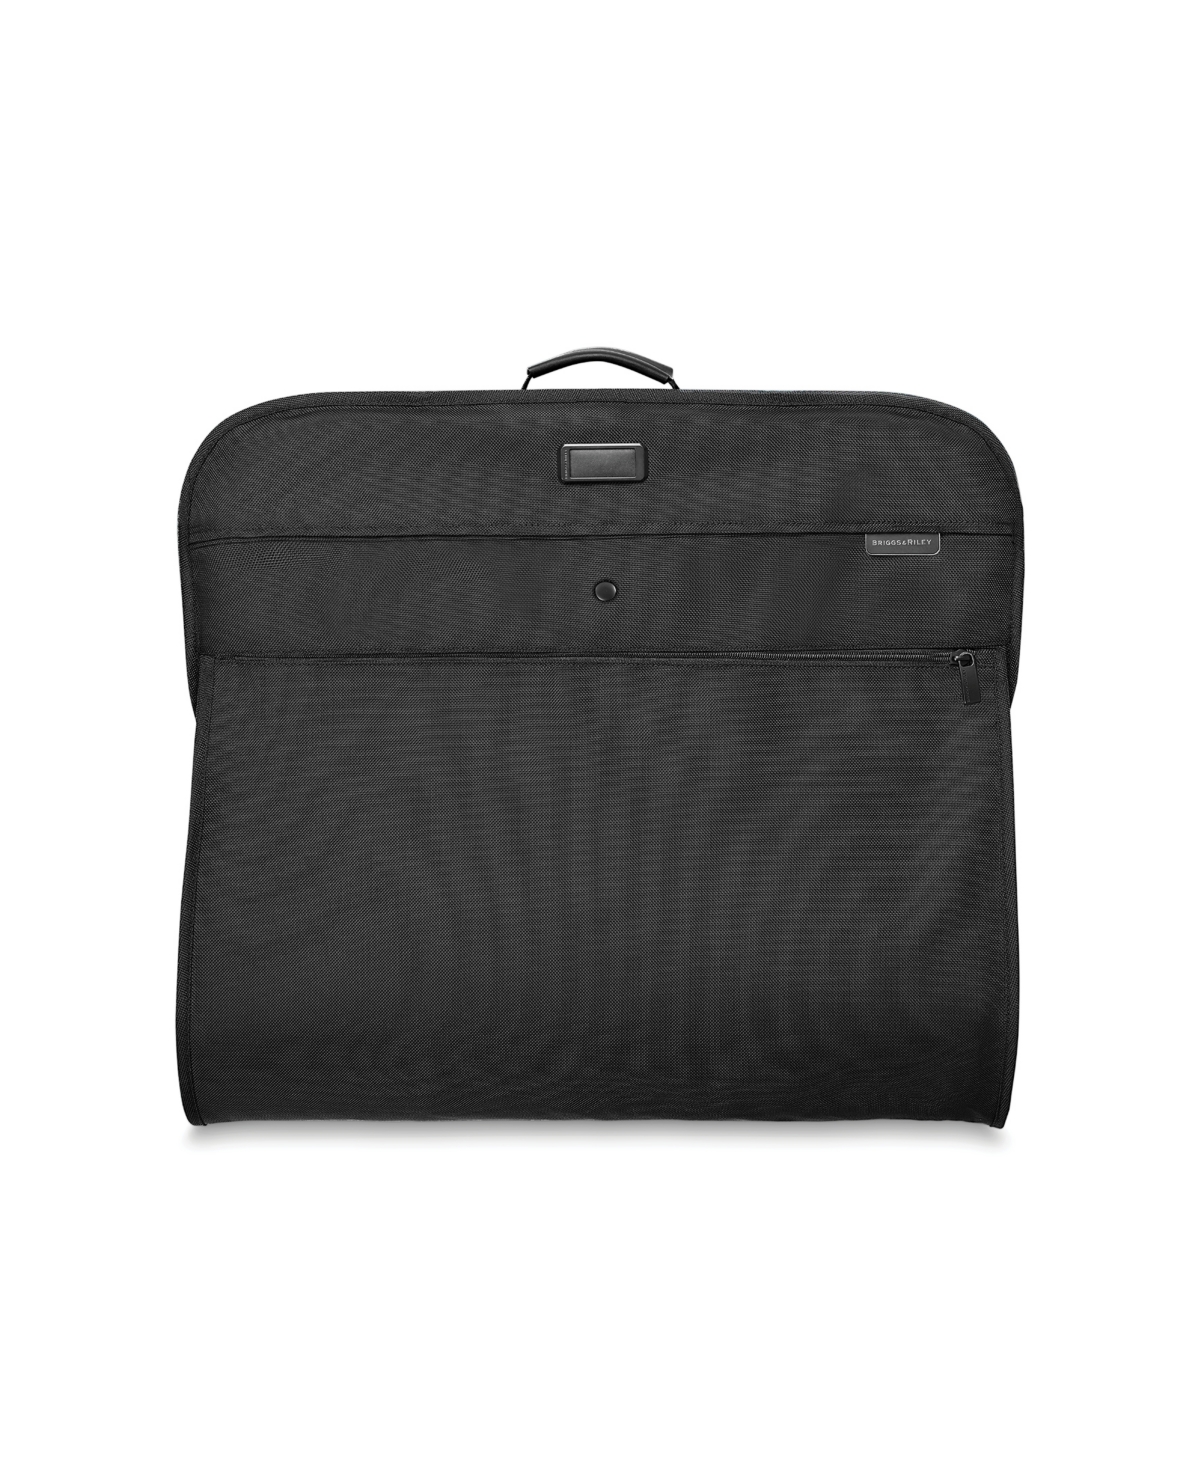 Baseline Classic Garment Bag - Black